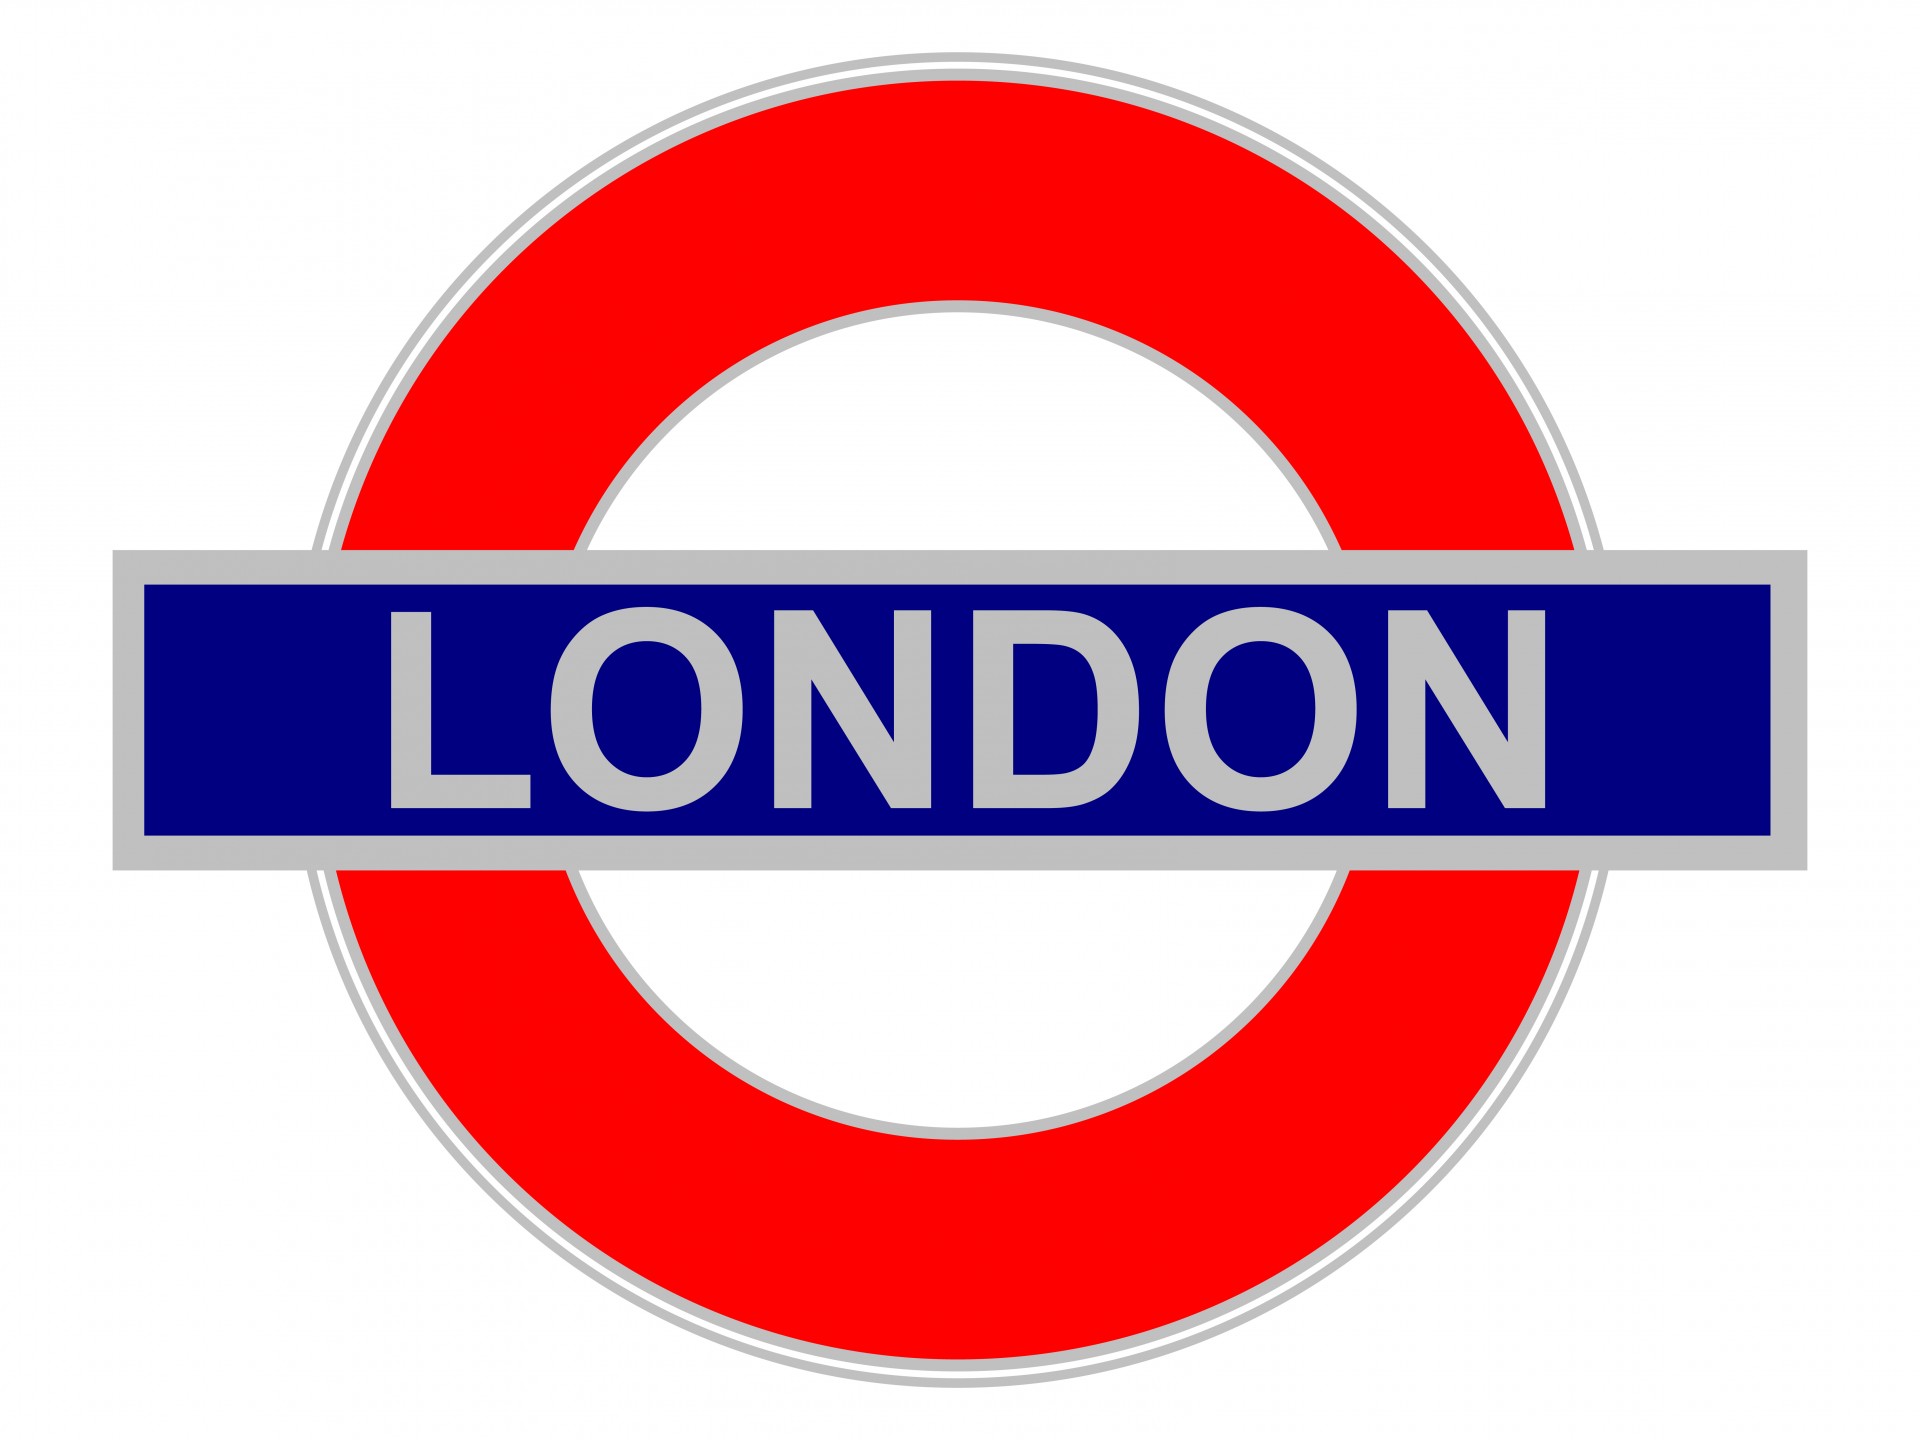 London Icons Clipart Images - Public Domain Pictures - Page 1